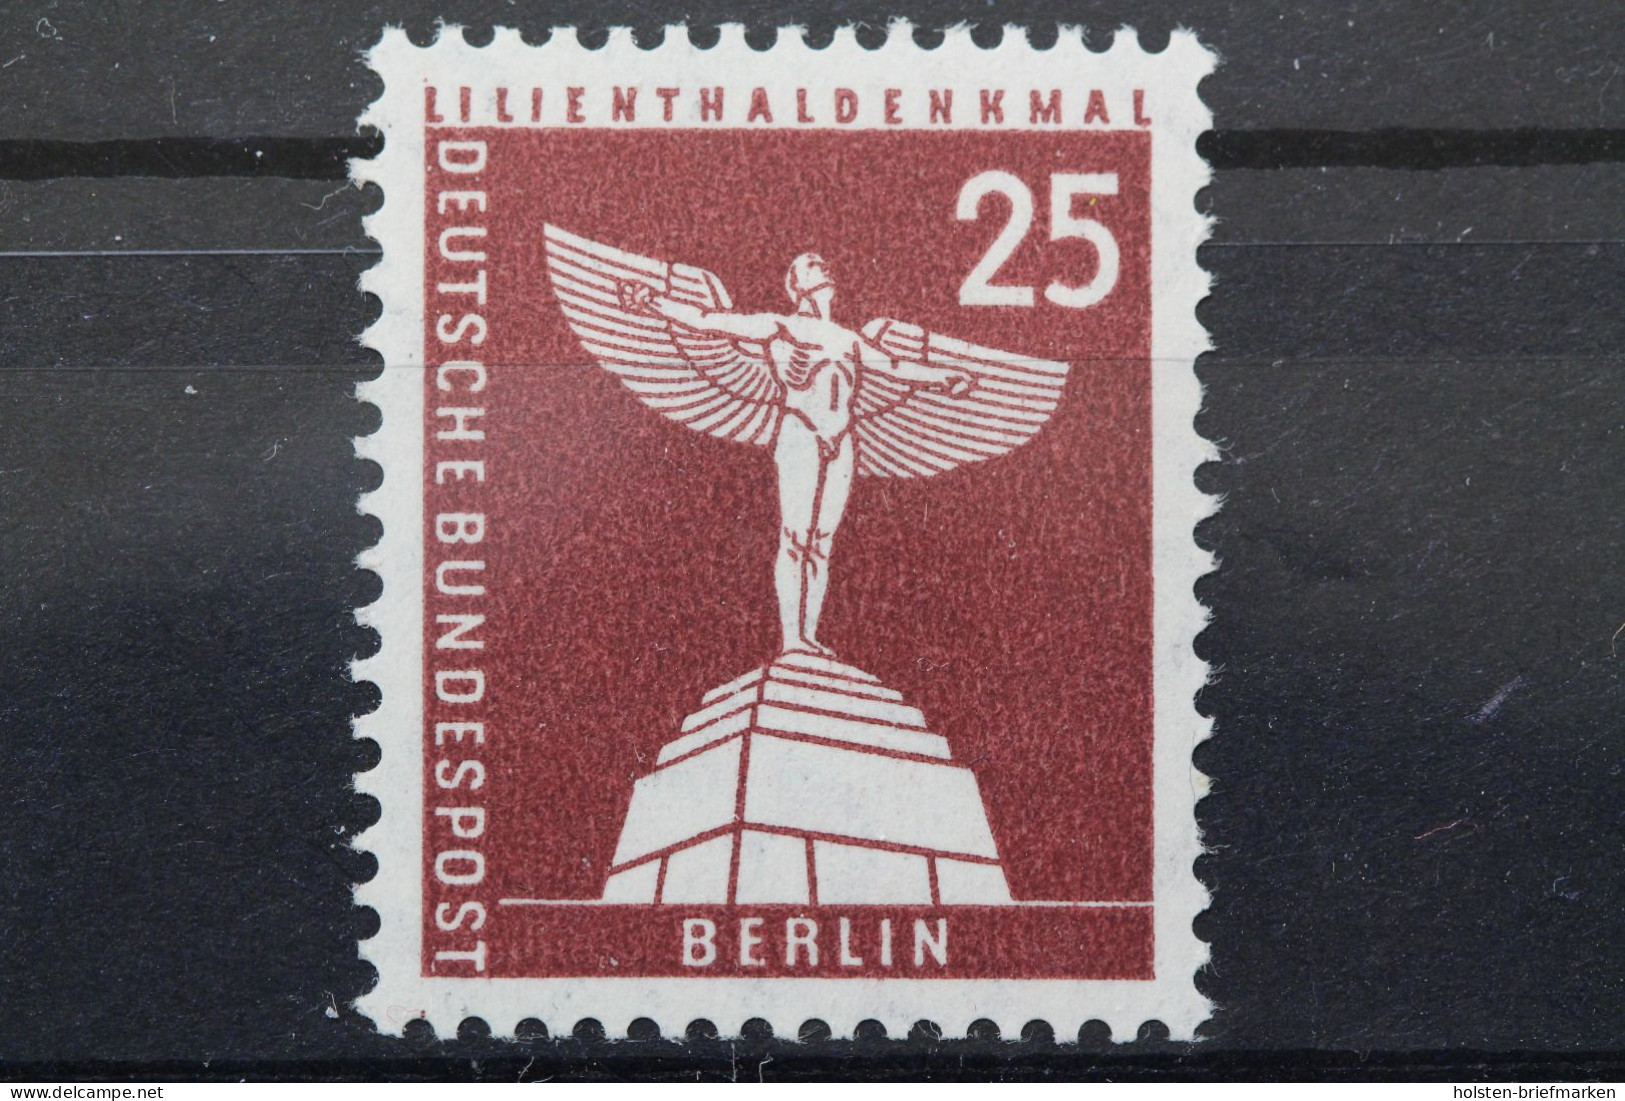 Berlin, MiNr. 147 W V R, Postfrisch - Roller Precancels